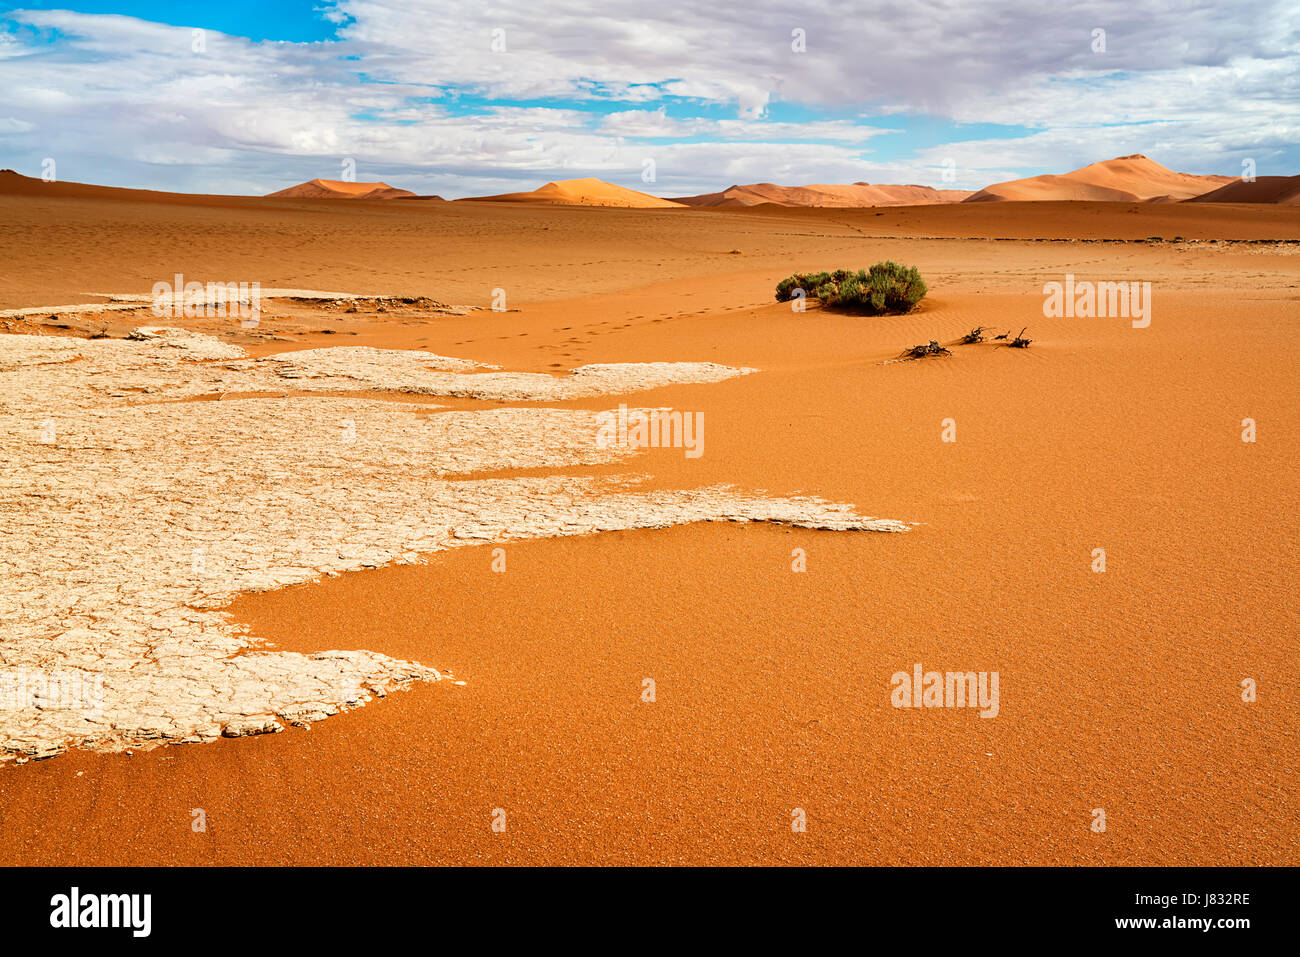 Gran desierto de arena Foto de stock